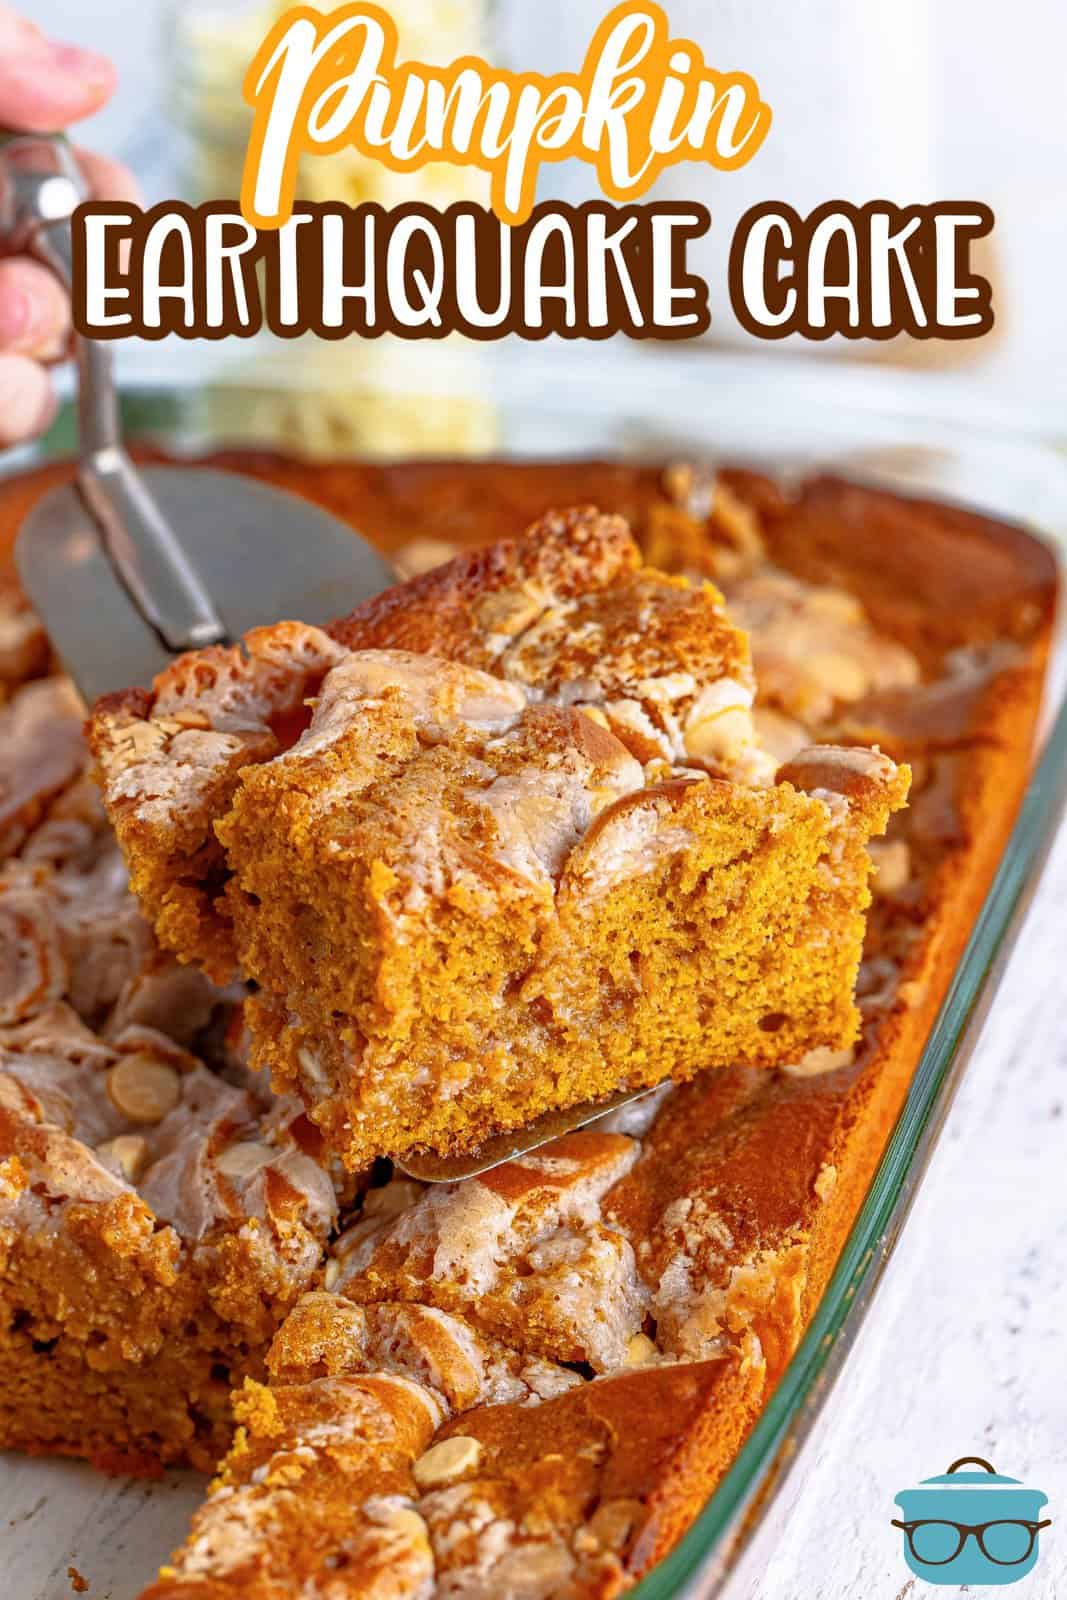 Pinterest image of cake server holding up a slice of the Pumpkin Earthquake Cake.